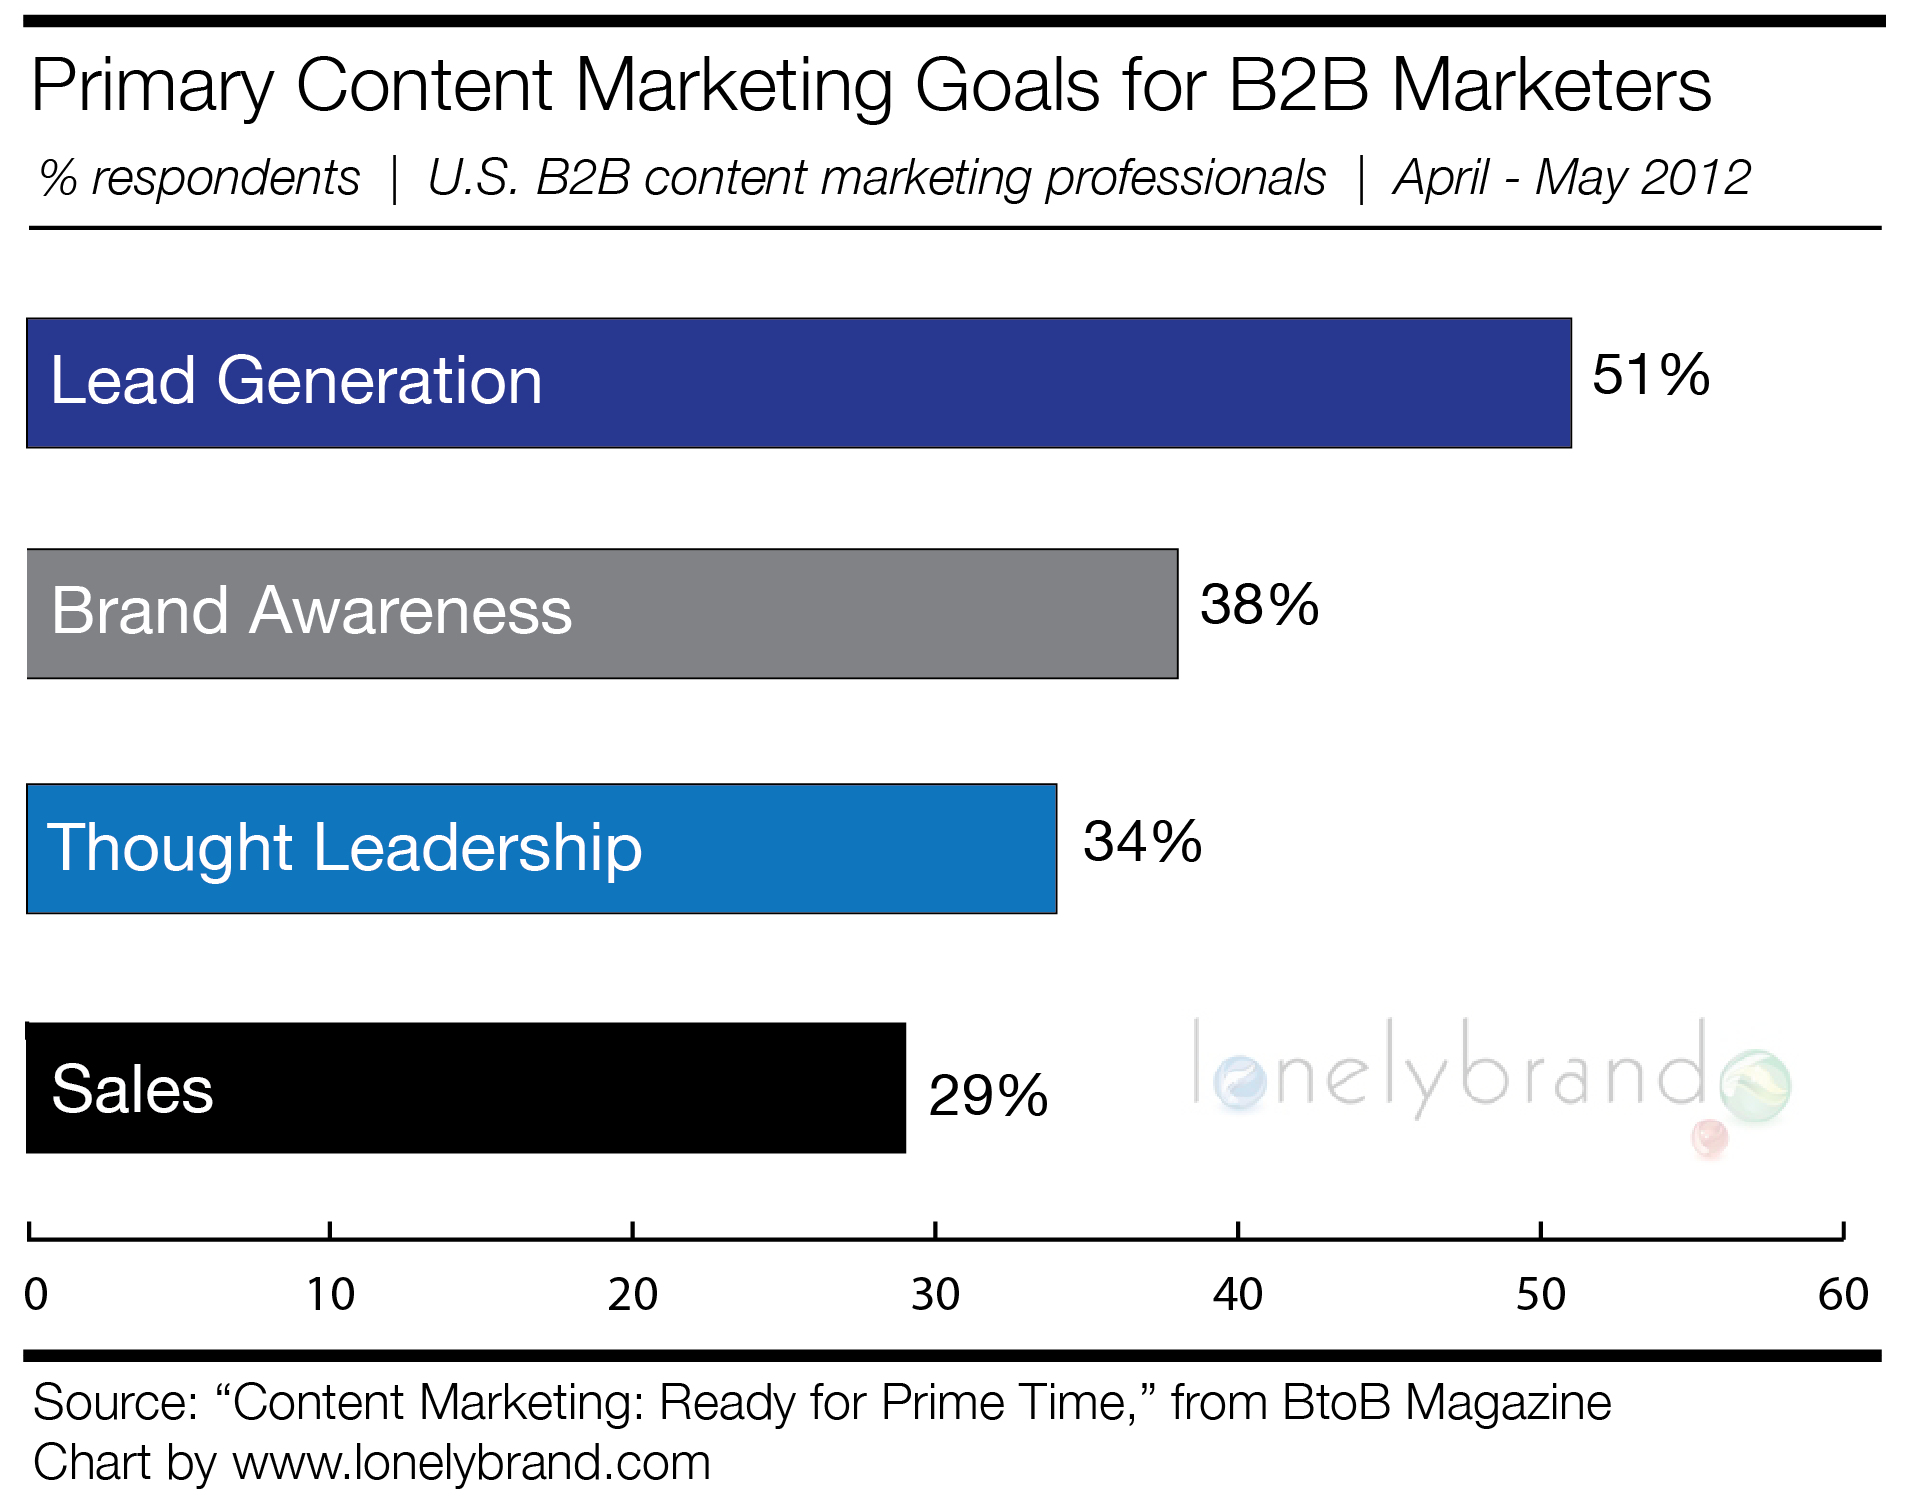 Primary B2B Content Marketing Goals 2012